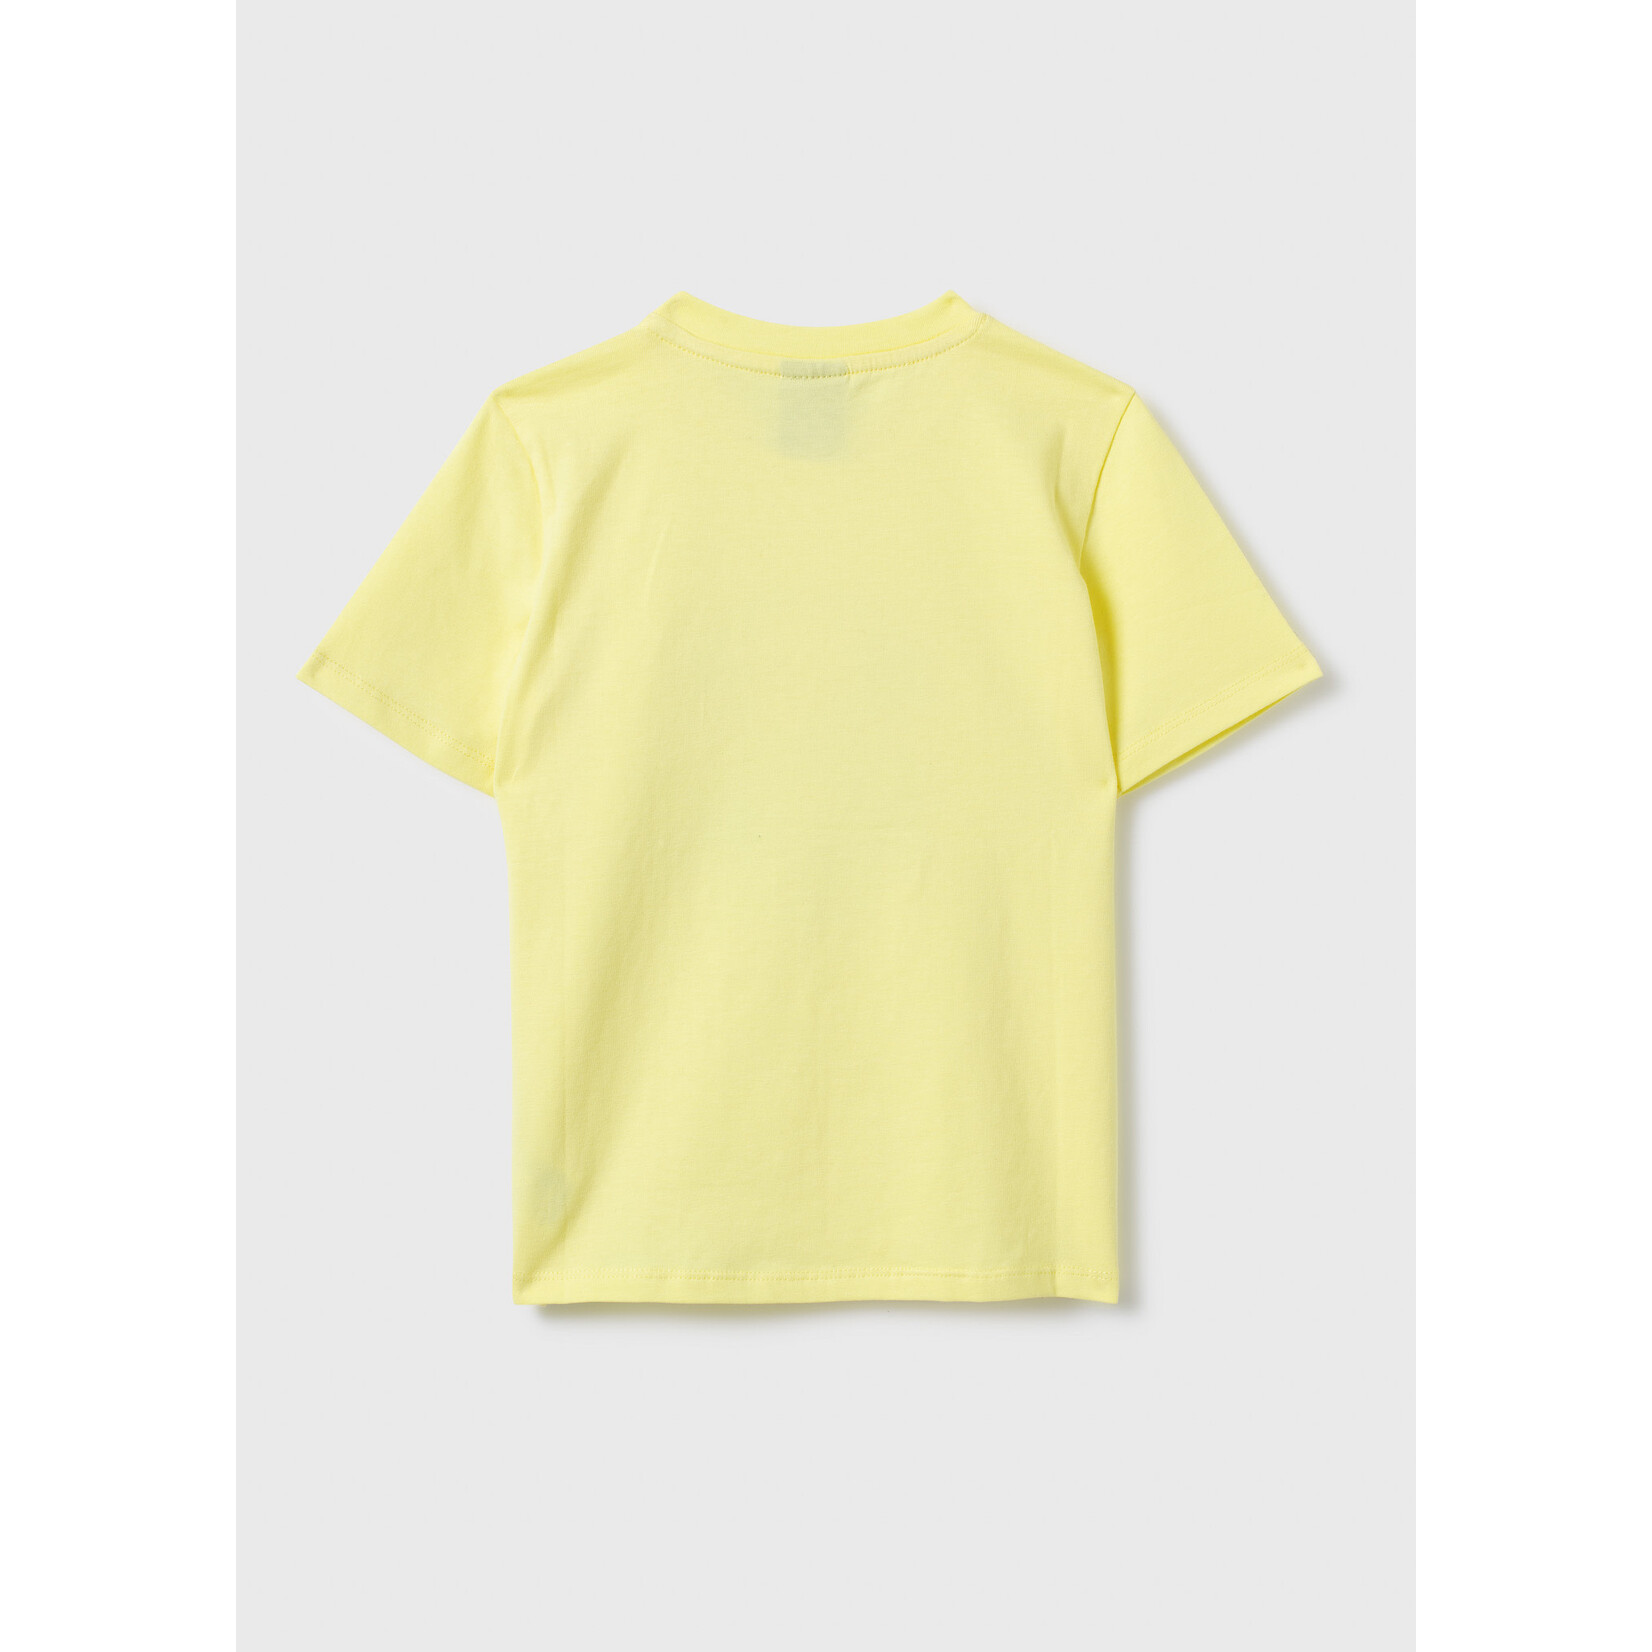 Northcoast NORTHCOAST - Yellow short sleeve t-shirt 'Laguna beach - California'